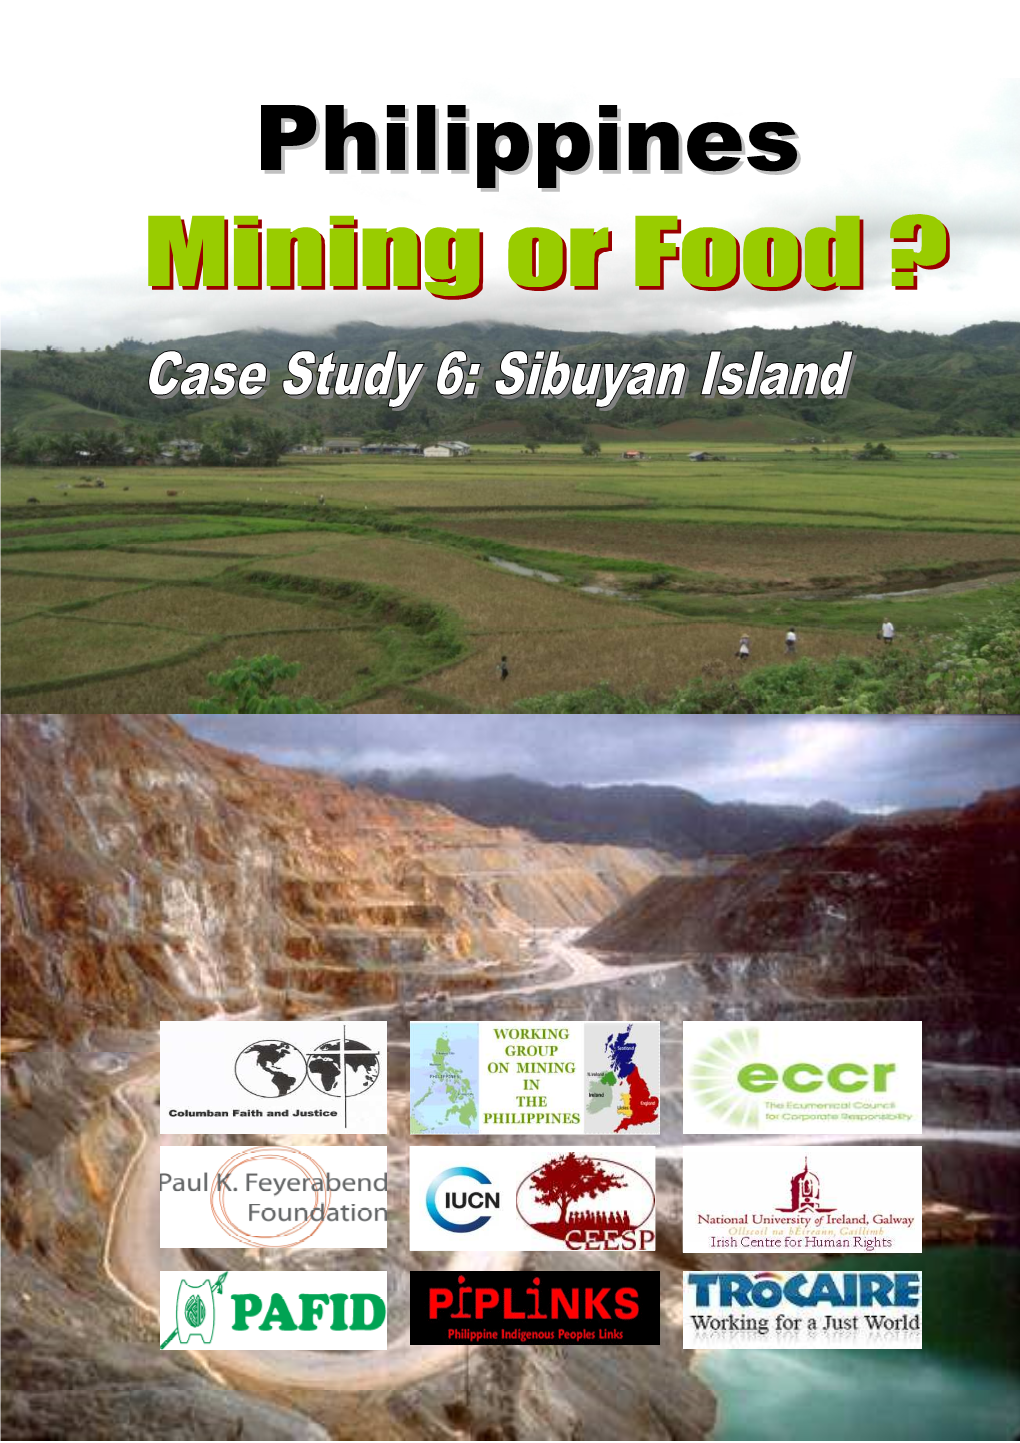 Case Study 6: Gold and Nickel Mining - Sibuyan Island